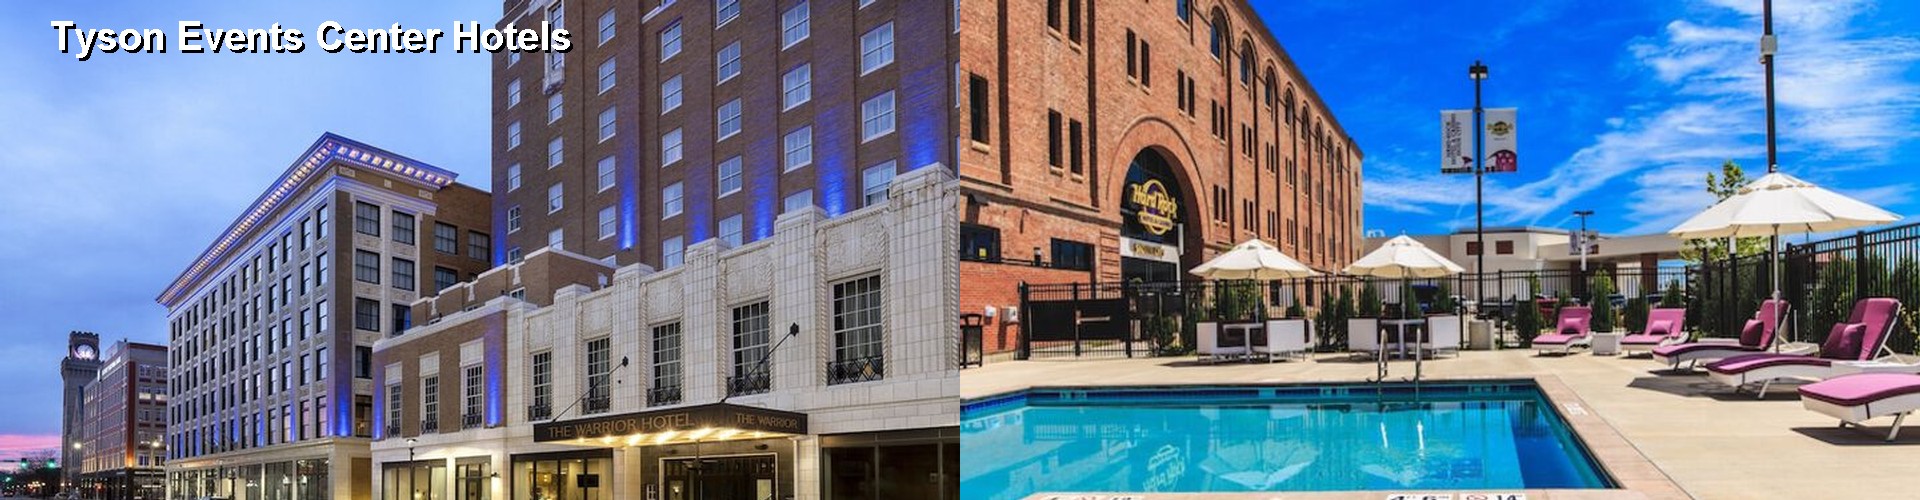 5 Best Hotels near Tyson Events Center